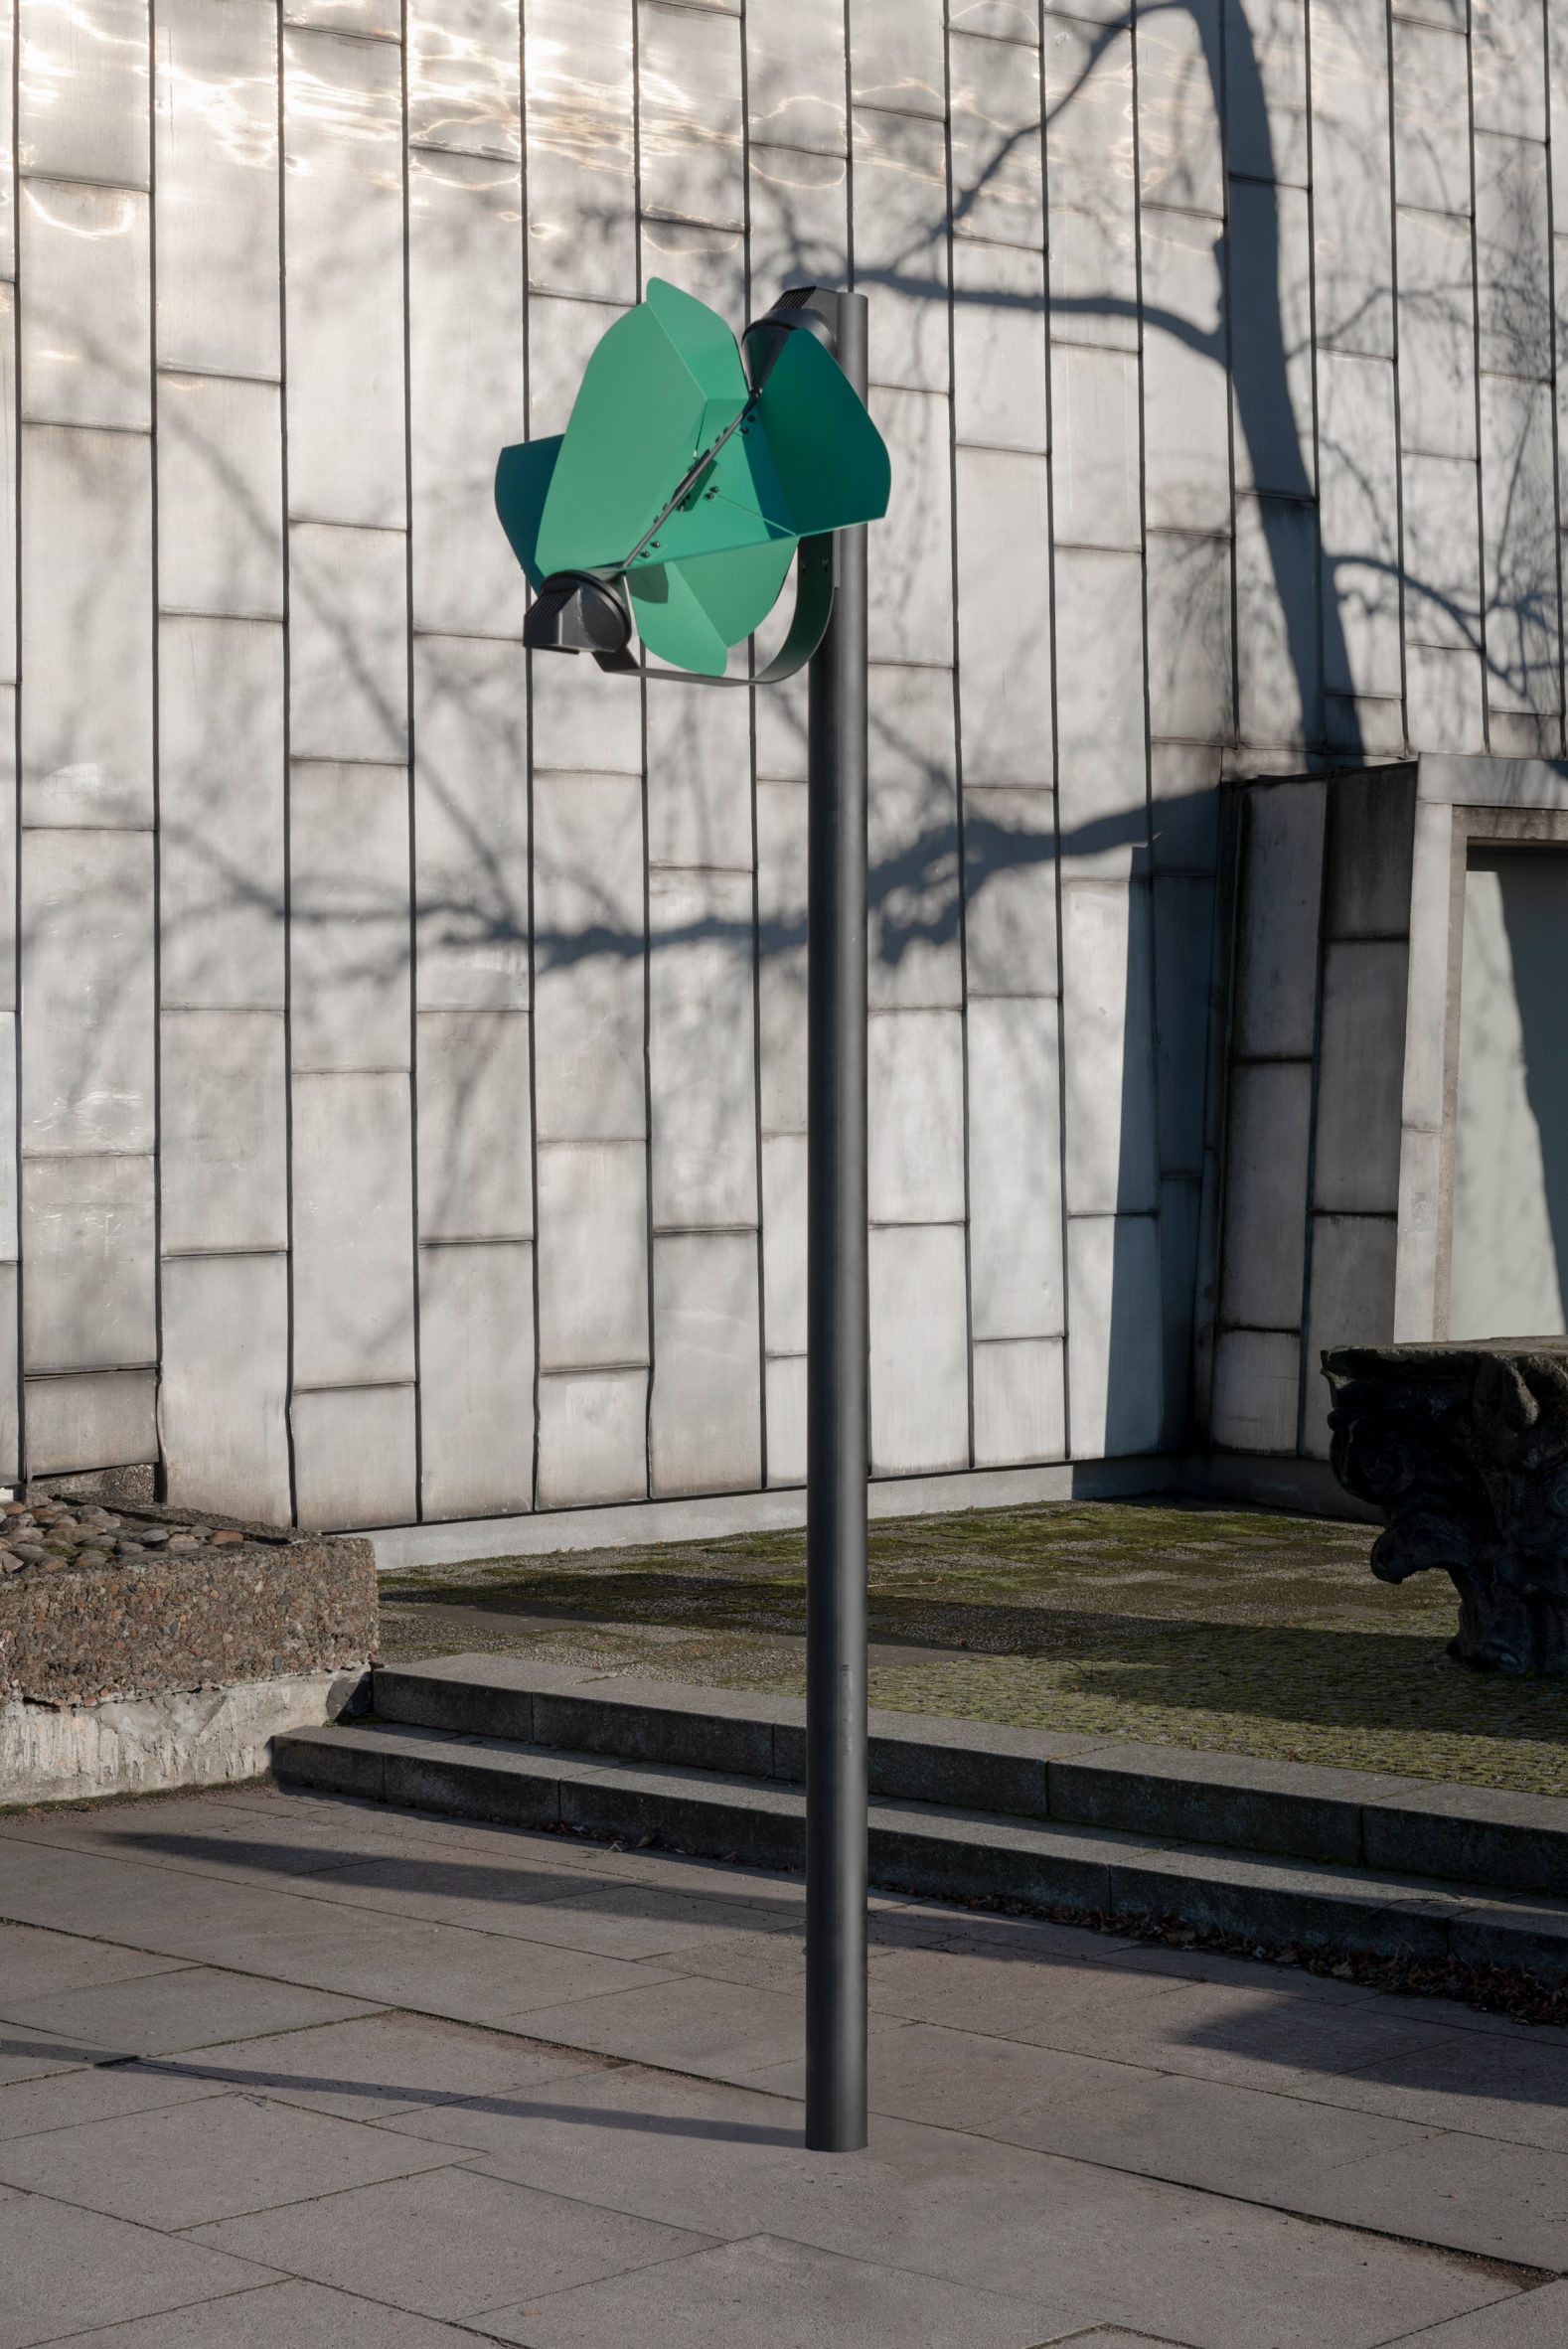 A modern street light designed by University of the Arts Berlin's graduate